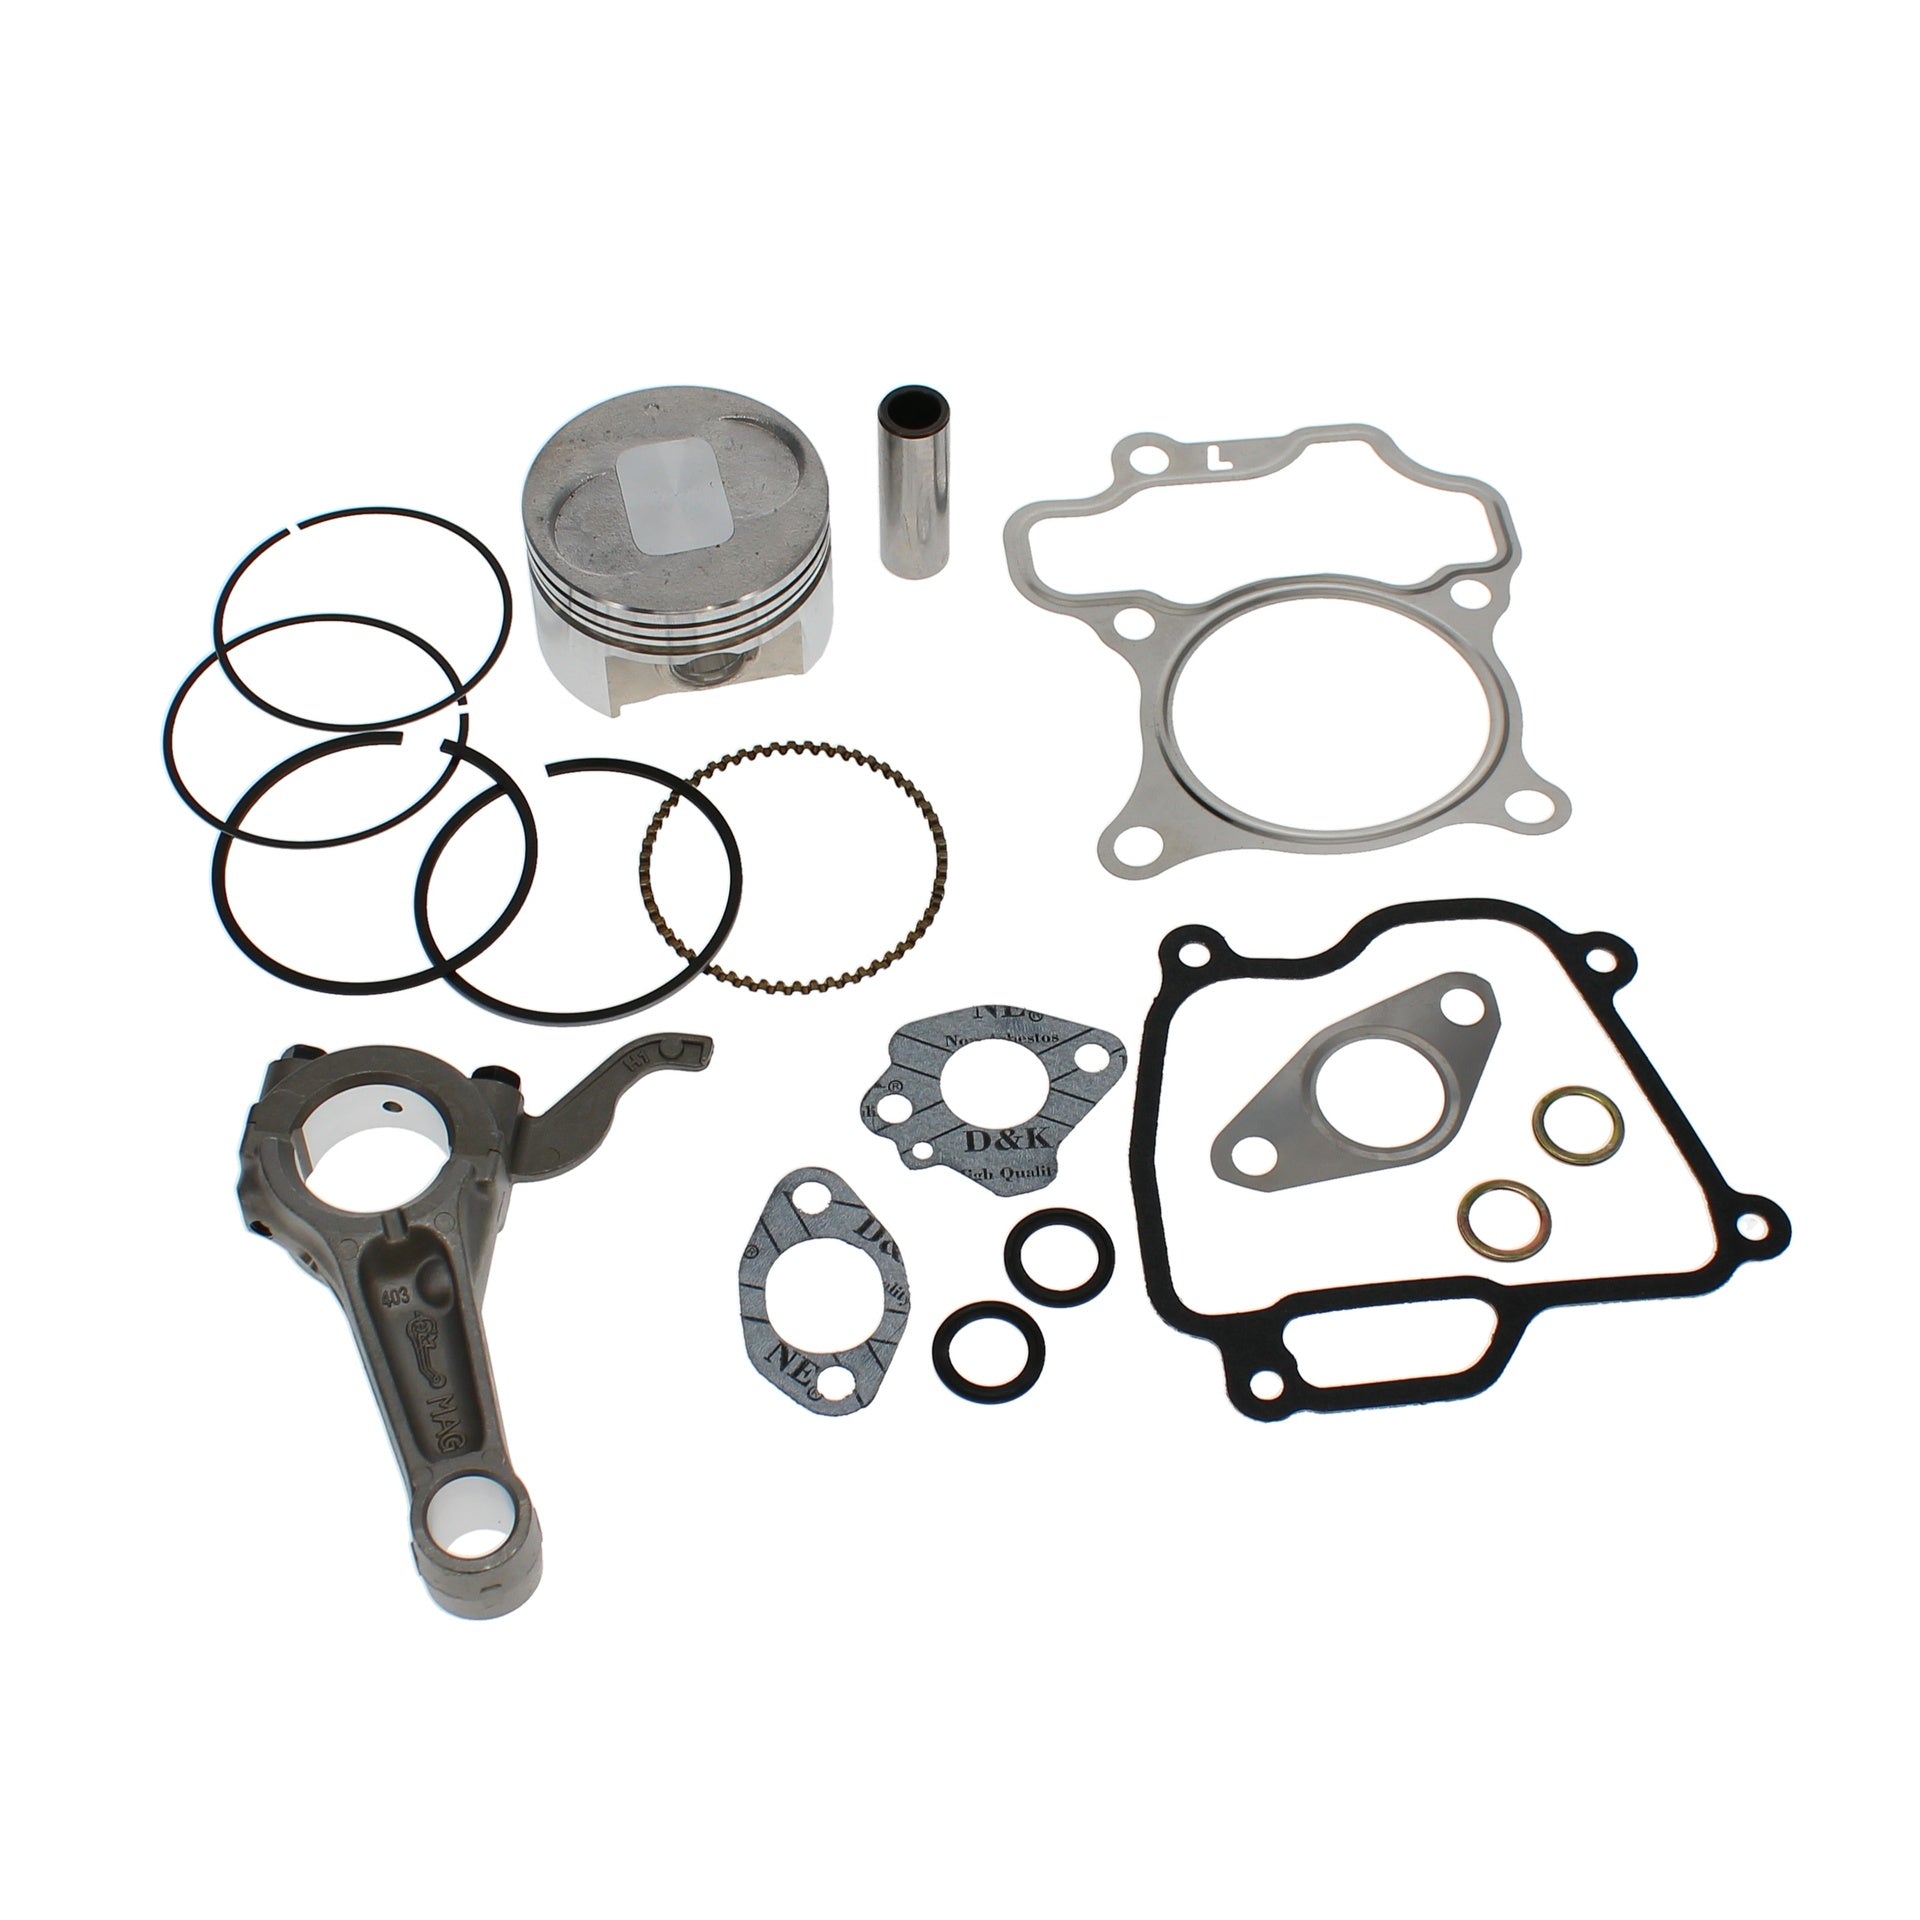 Piston & Ring Connecting Rod Gasket Kit fits Subaru Robin EX17